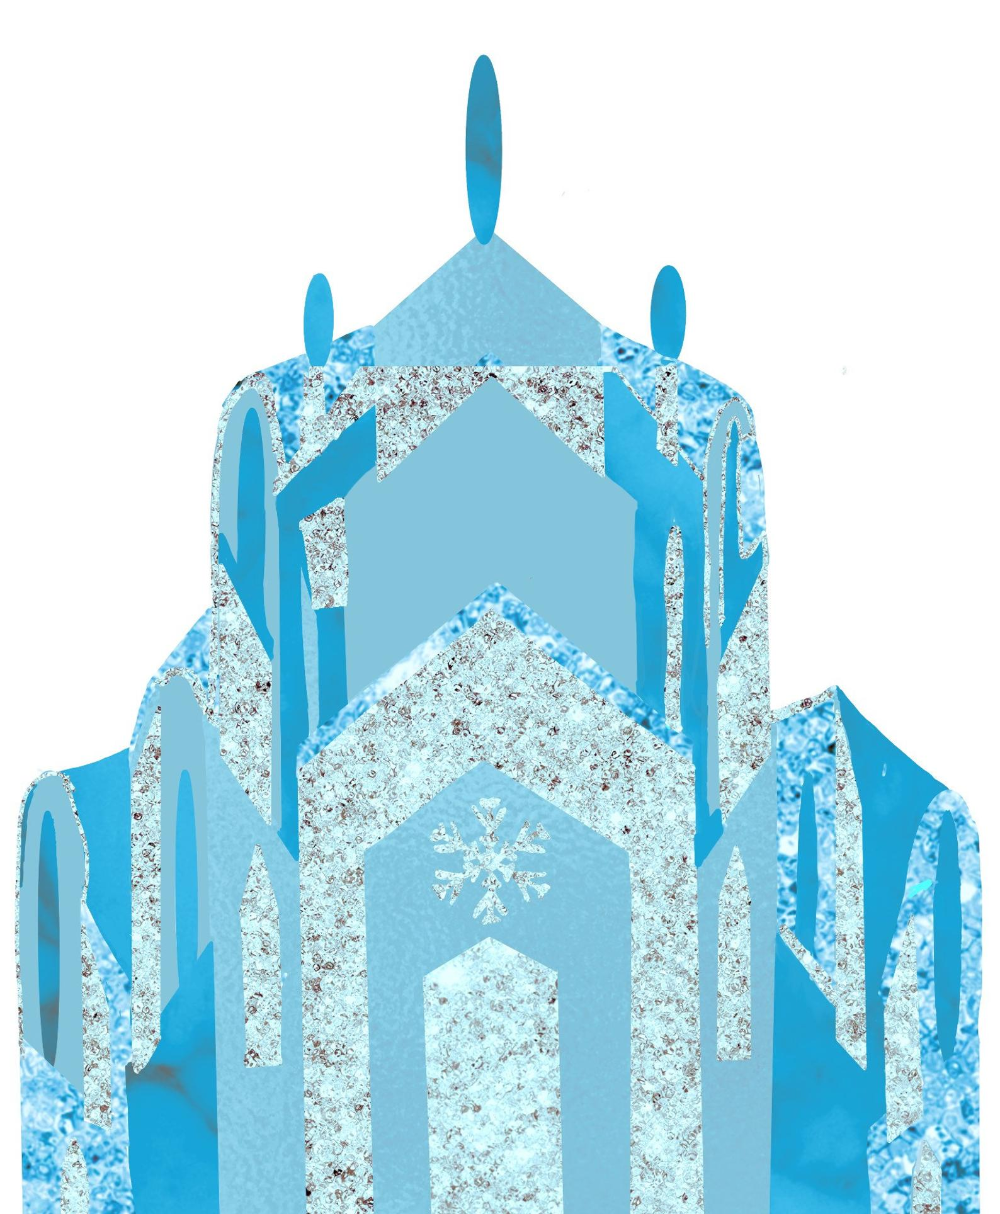 Frozen Elsa Ice Castle Cake Topper Etsy Castle Cake Topper Ice Castle Cake Castle Cake